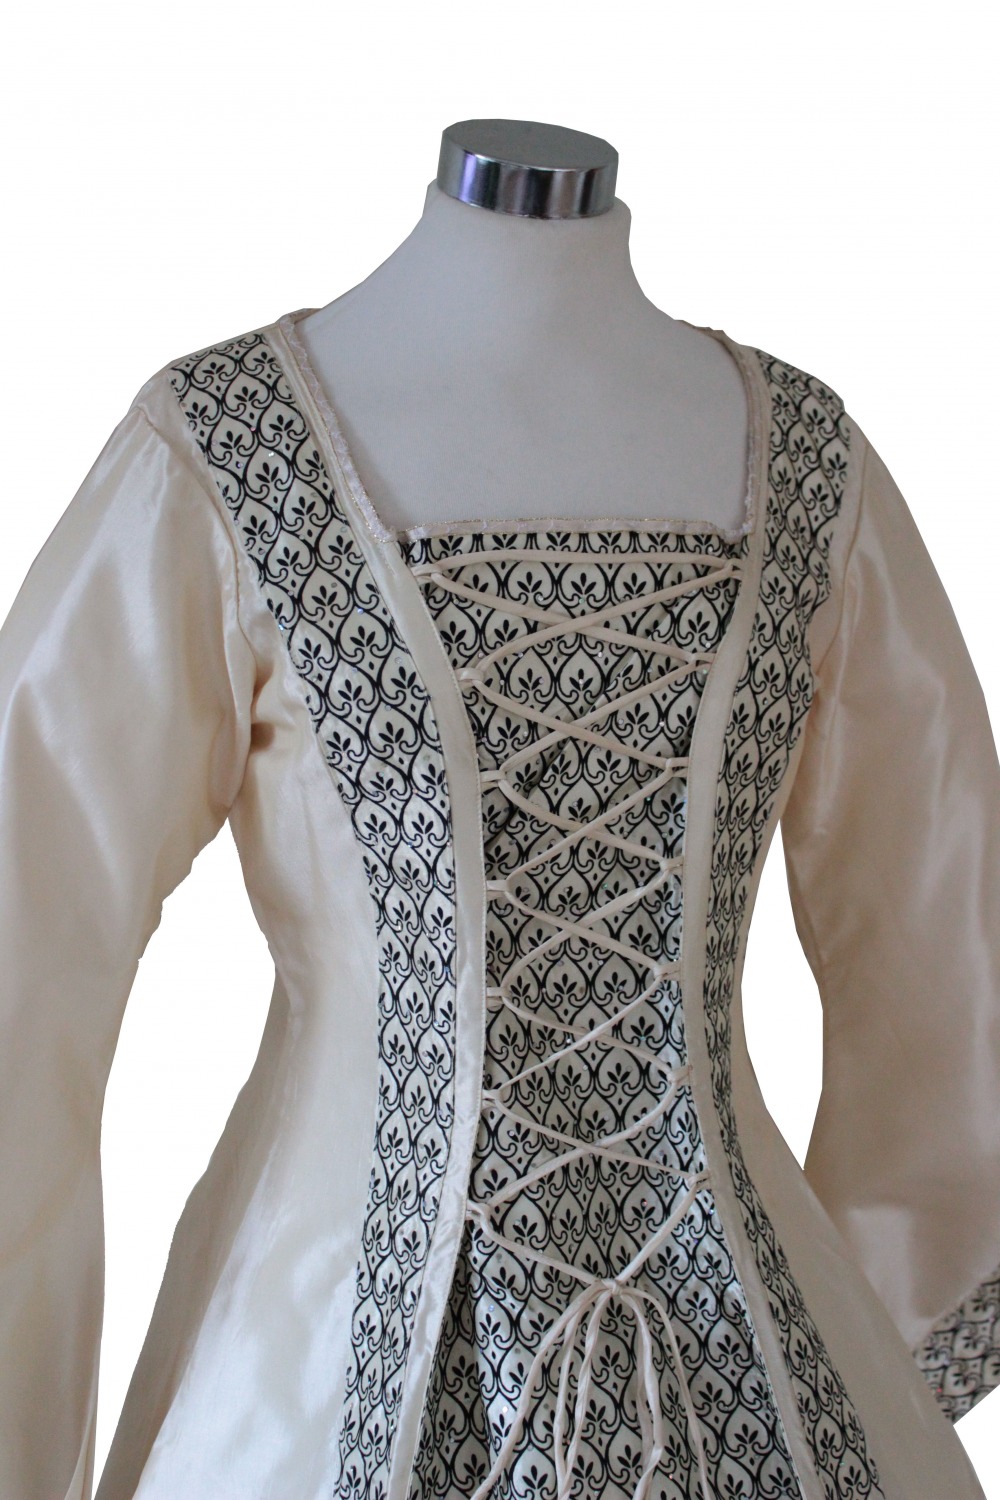 Ladies Medieval Renaissance Tudor Costume Size 14 - 16 Image